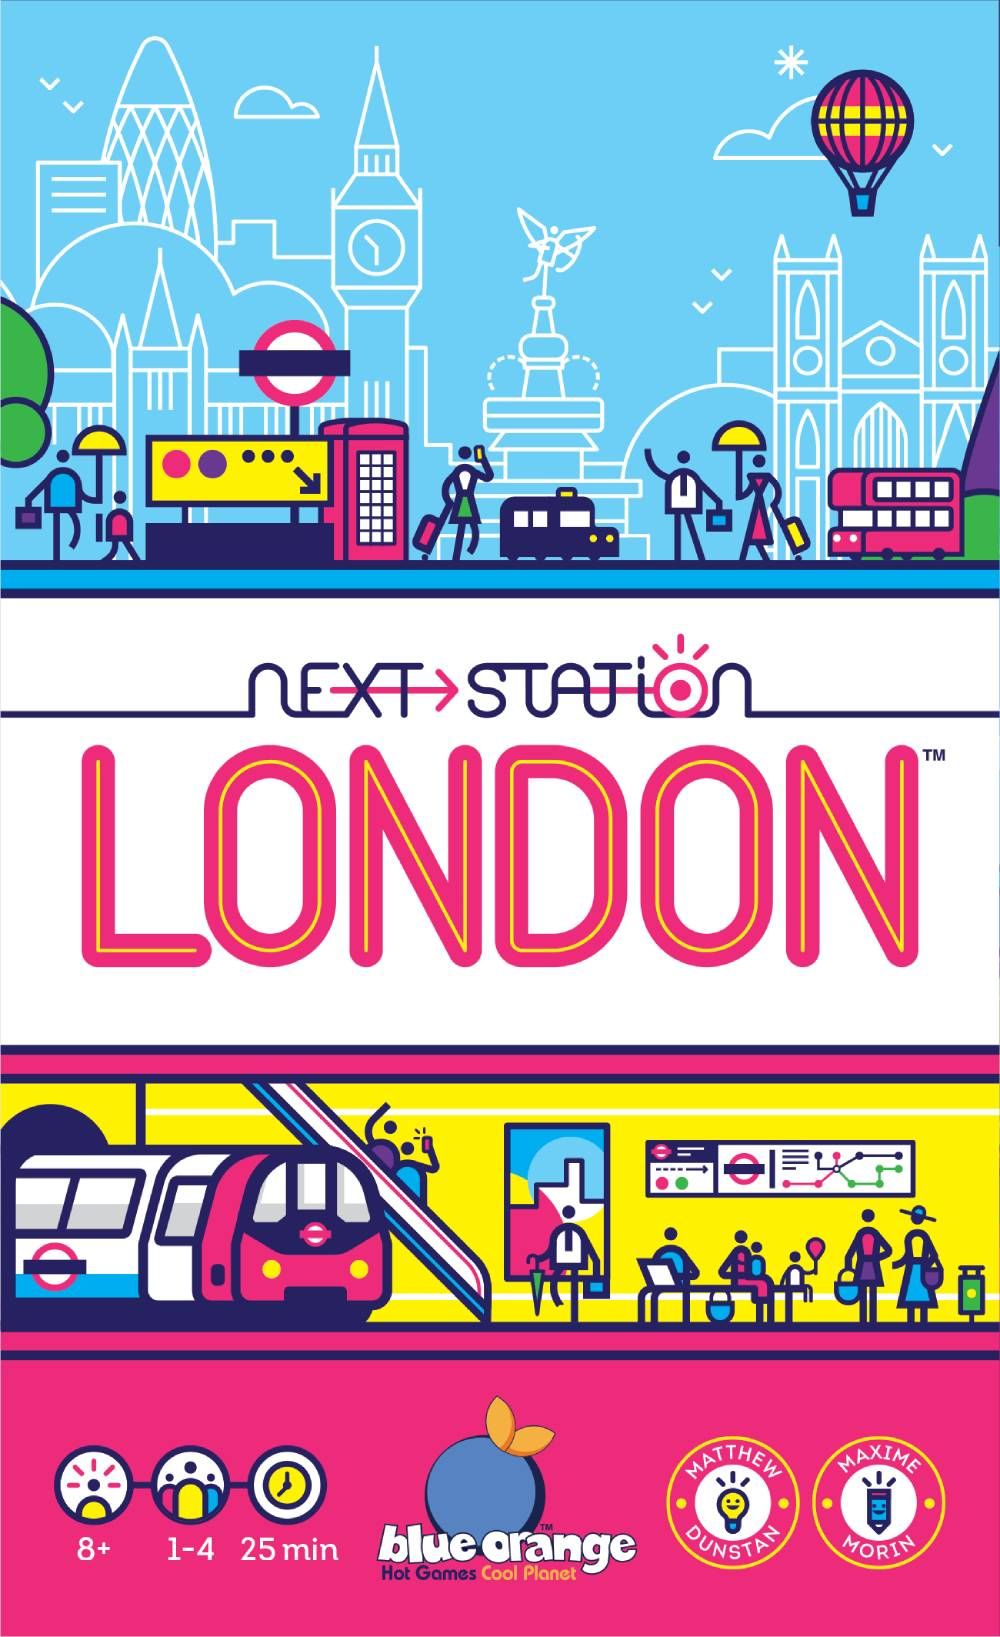 Next Station: London box art